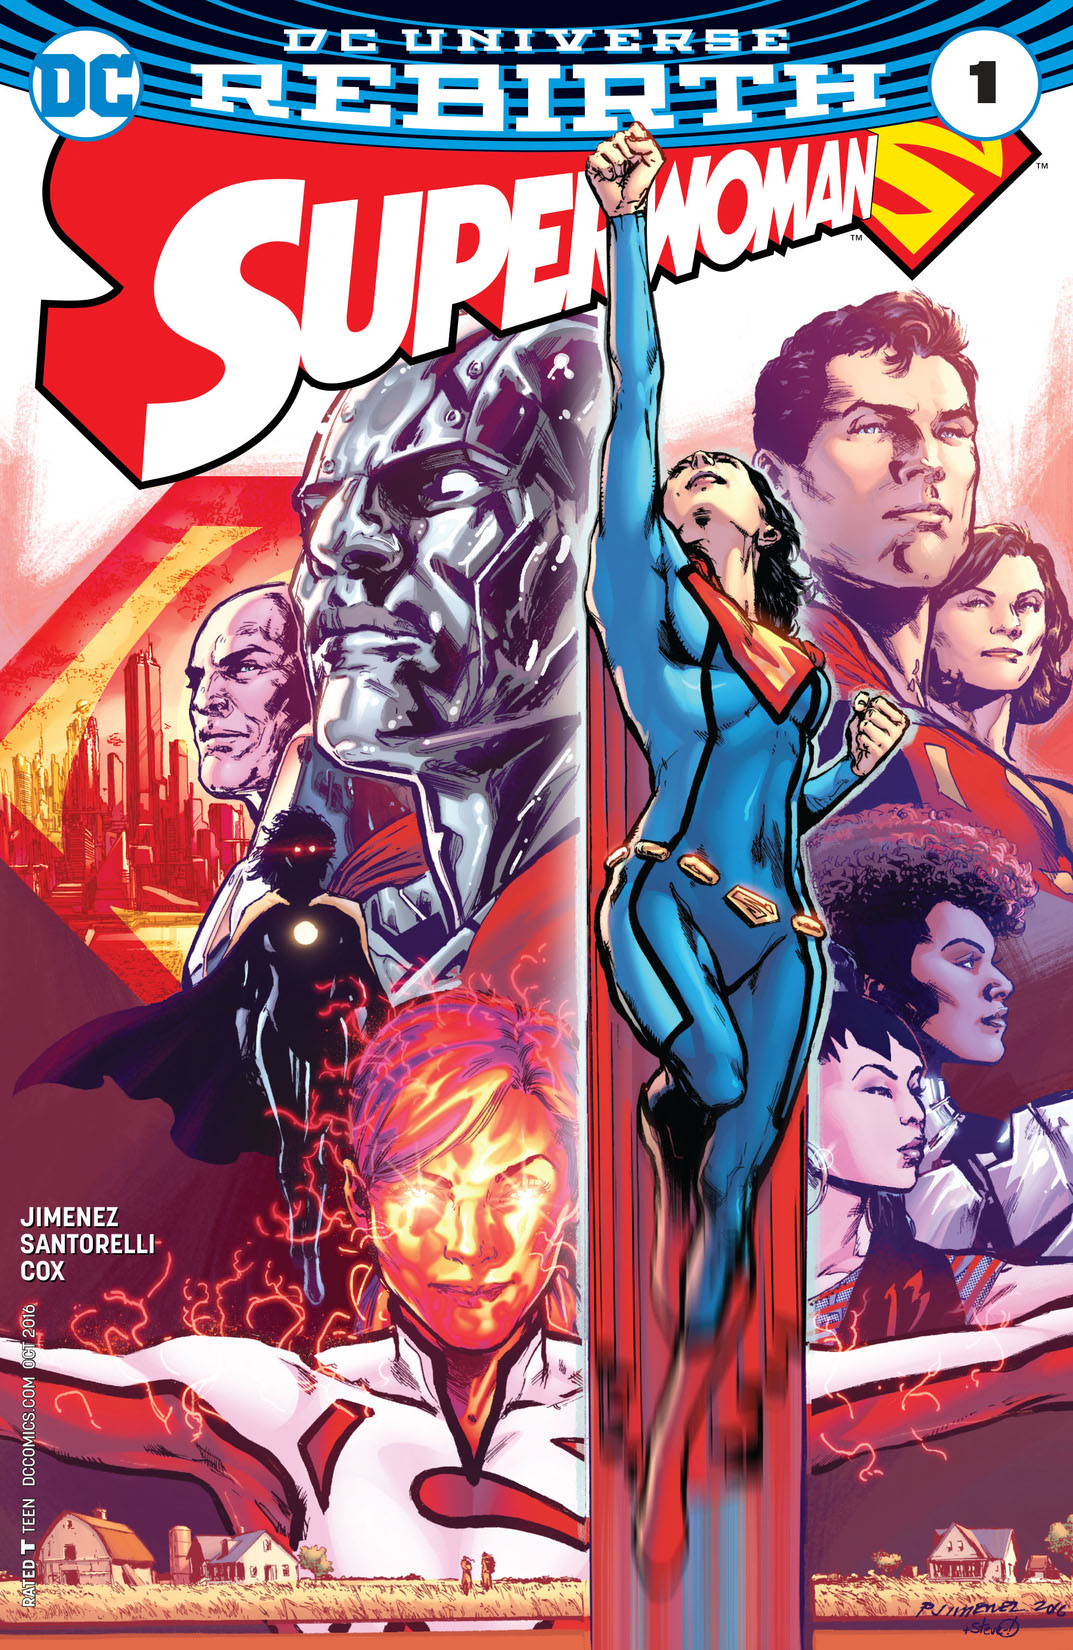 Superwoman #1 preview images